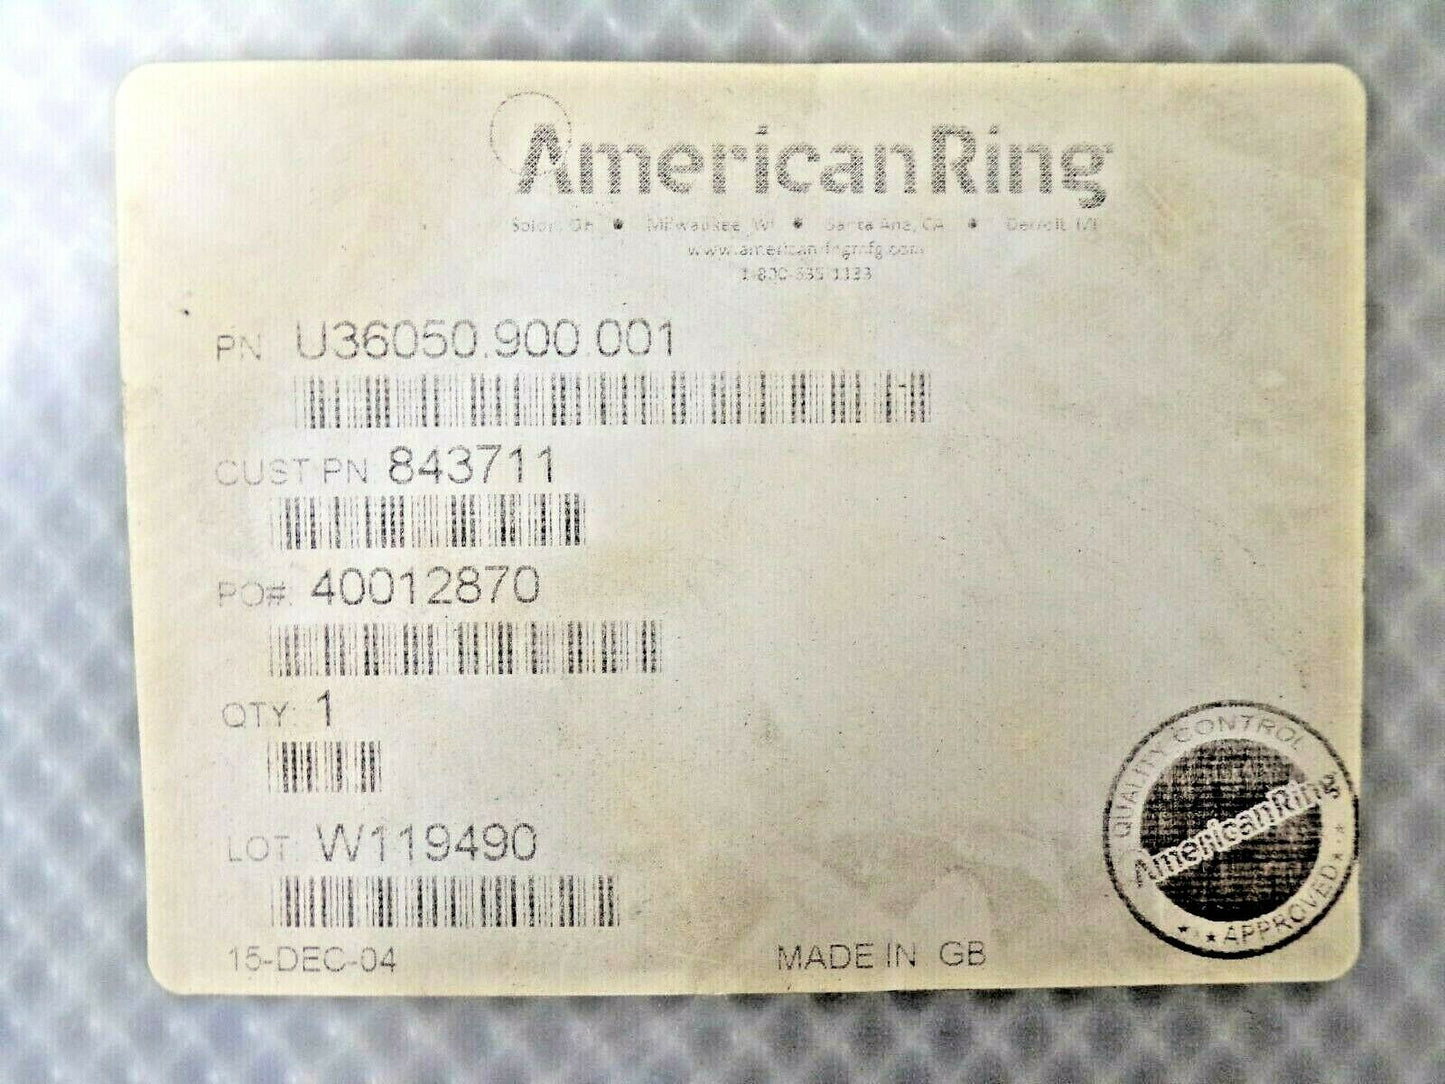 5000 Series - Internal Retaining Ring With Lugs, 9.83" X 0.187",  5000-900 (183788047881-NBT18)